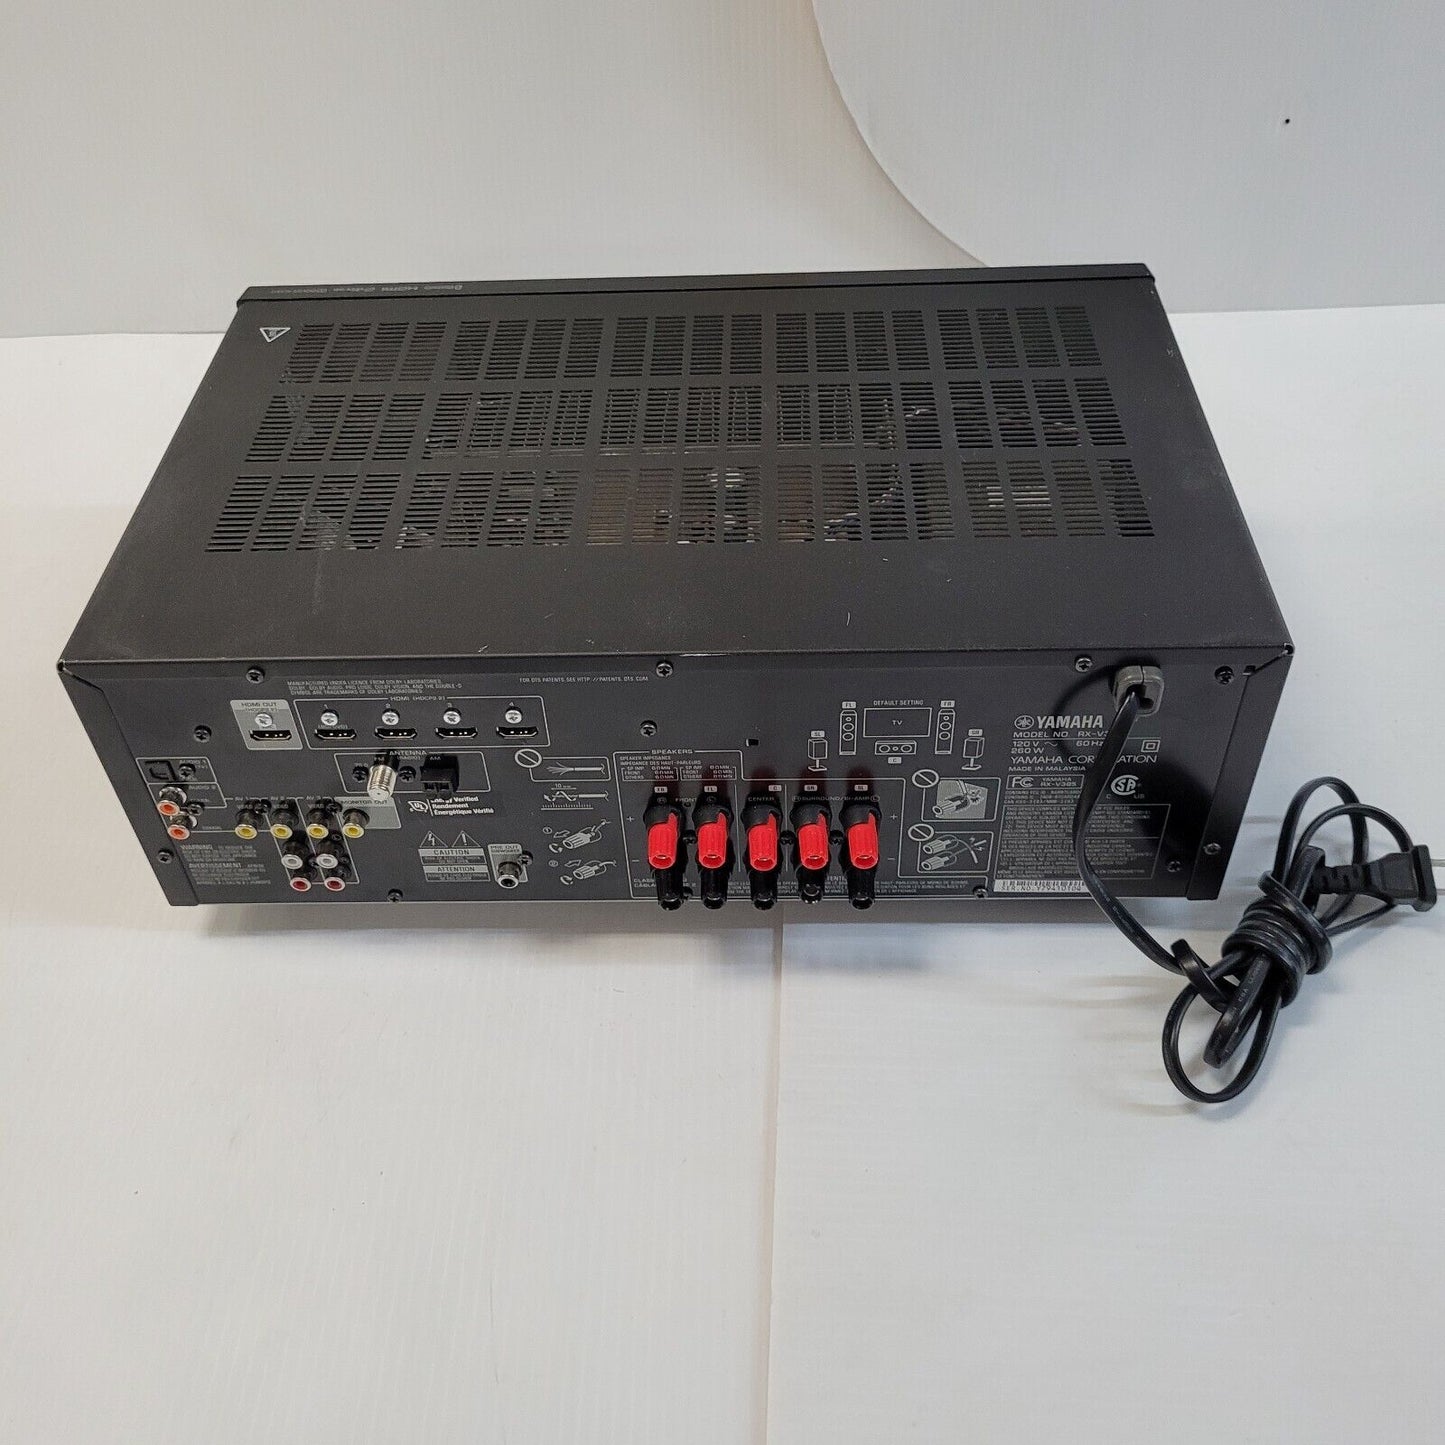 (N75923-1) Yamaha RX-V385 Receiver